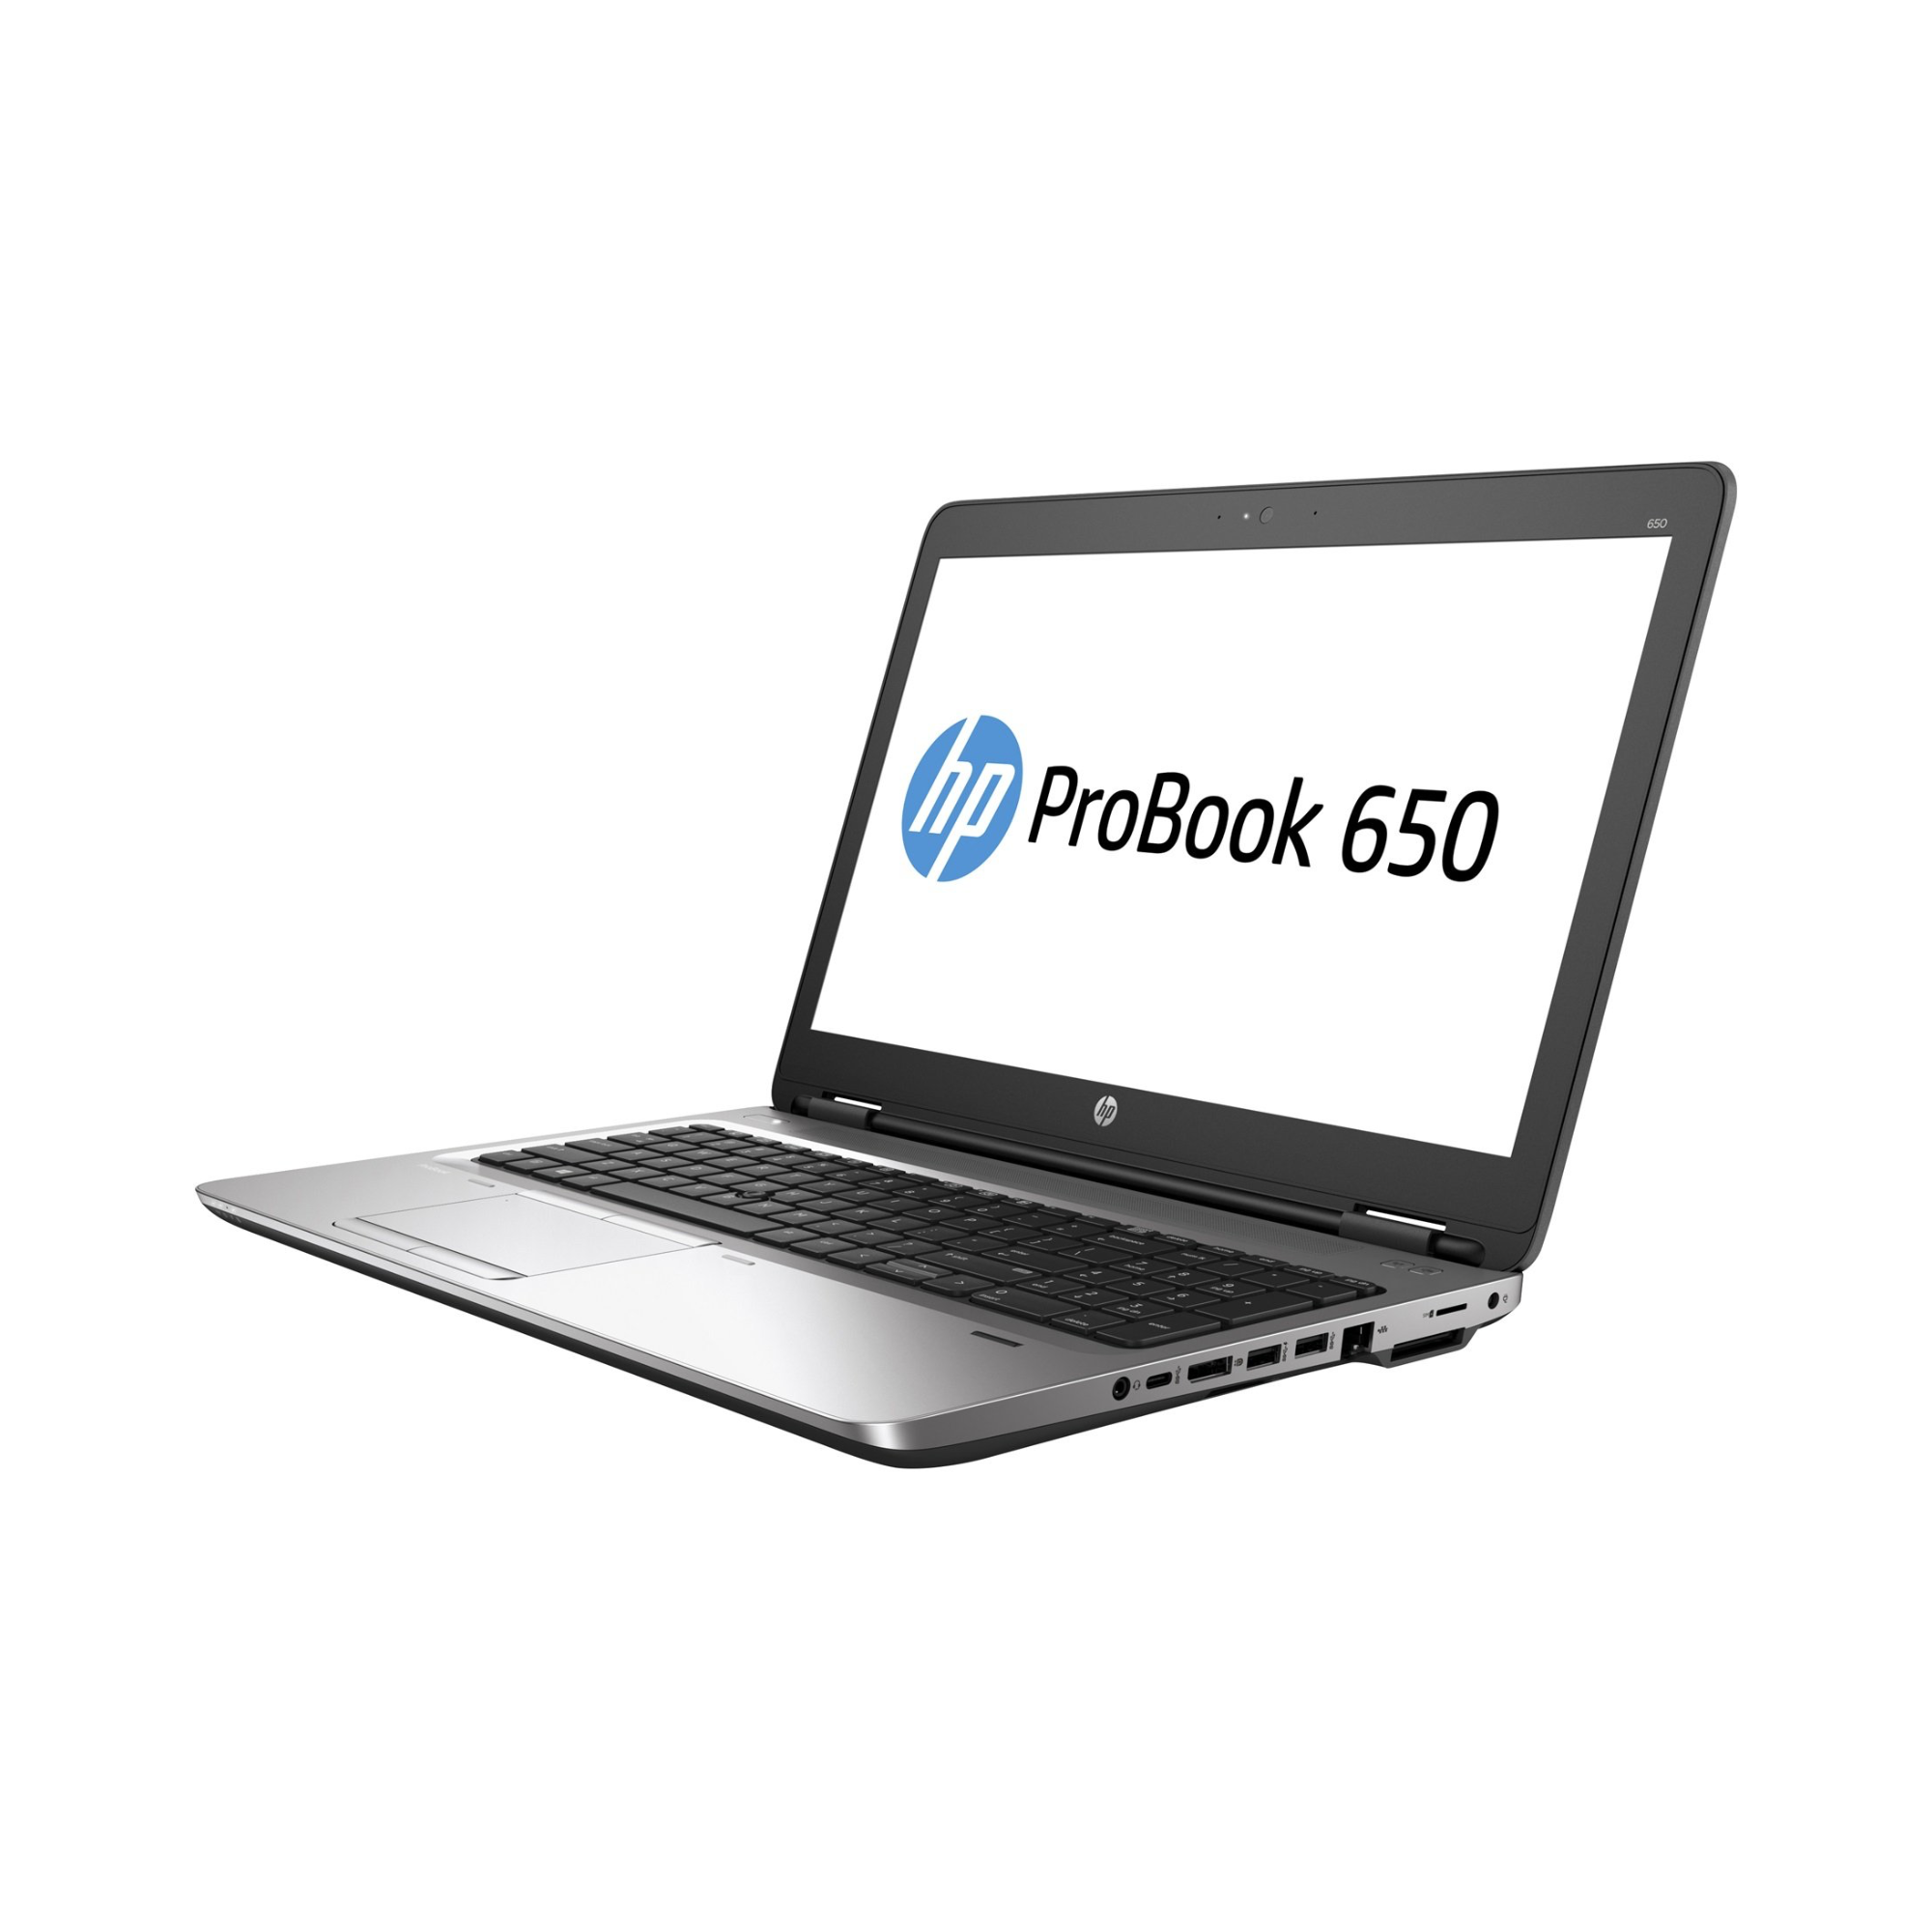 HP ProBook 650 G2 i5 (6th Gen) 8GB RAM 256GB SSD 15.6